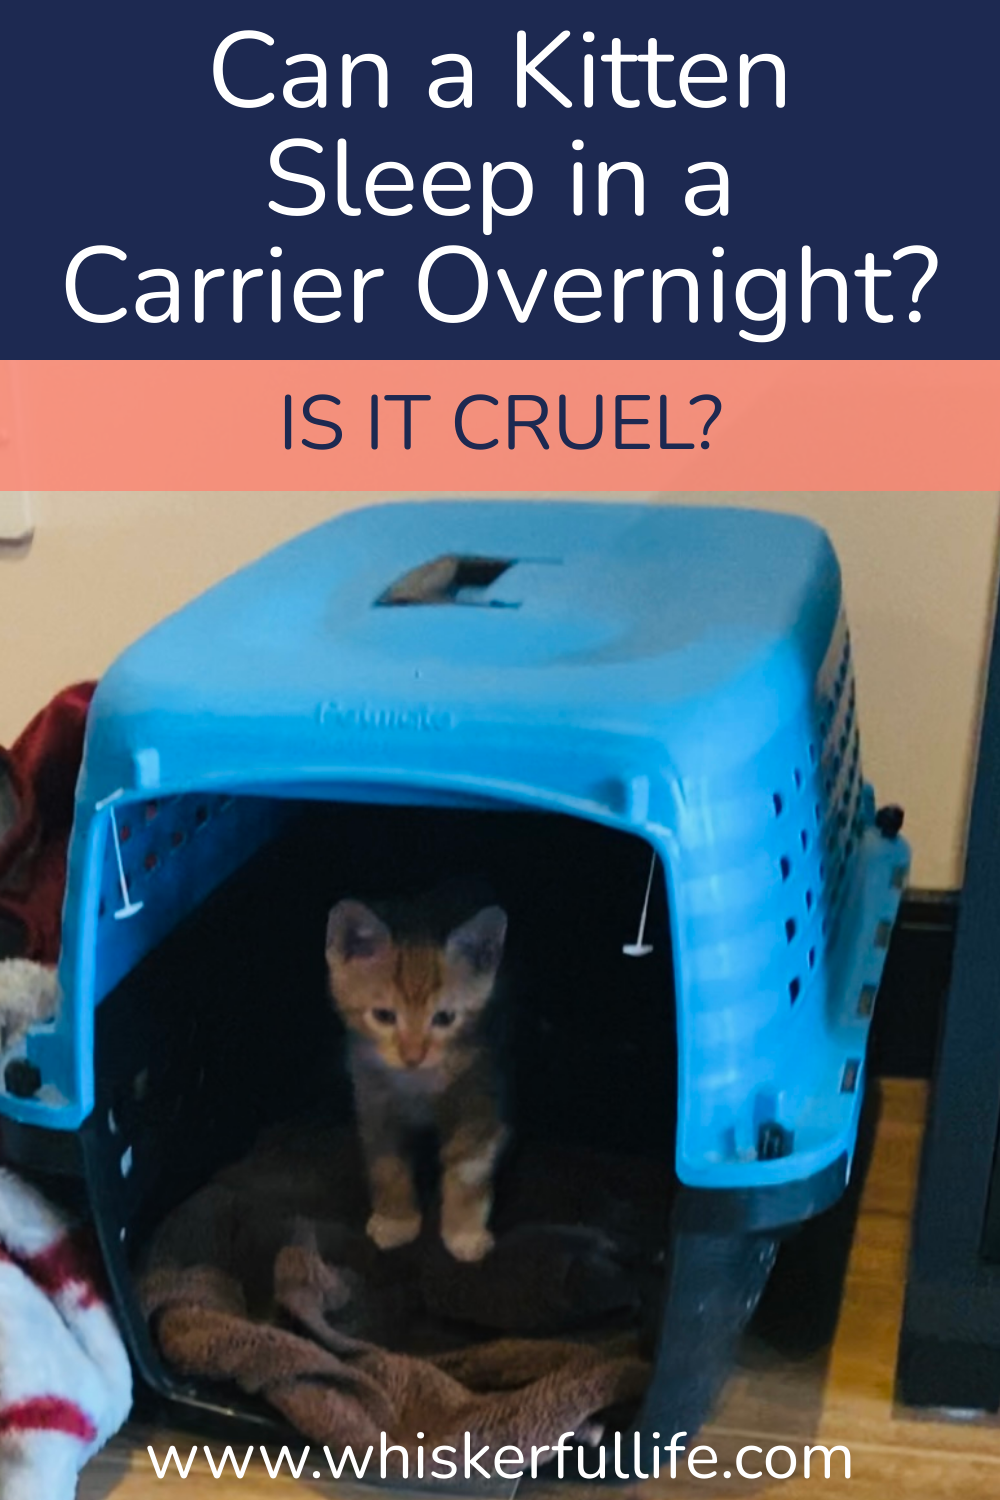 Can a Kitten Sleep in a Carrier Overnight?